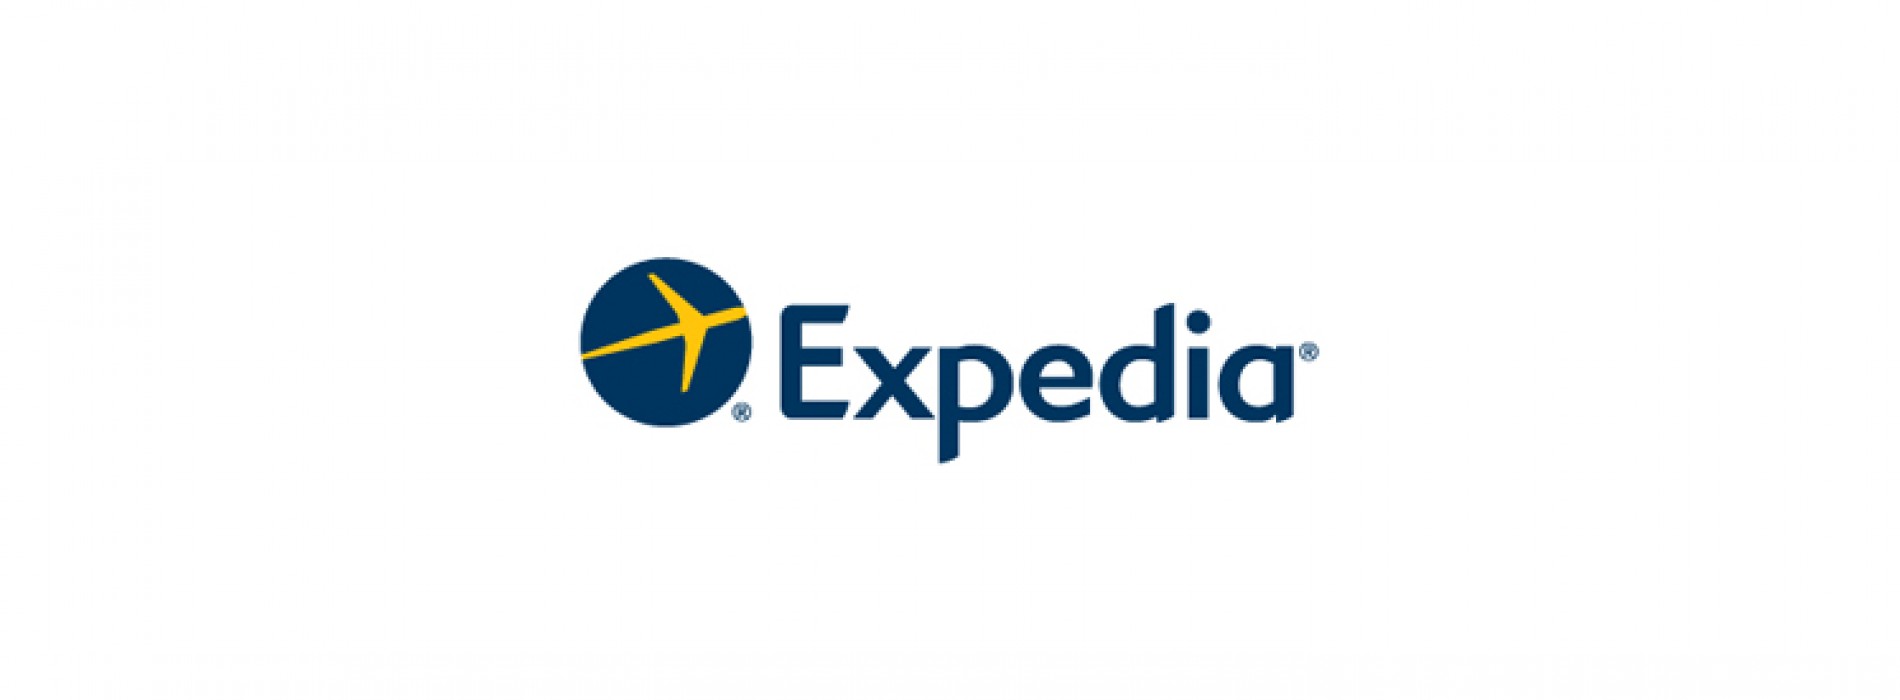 Expedia India Launches Loyalty Program: Expedia+